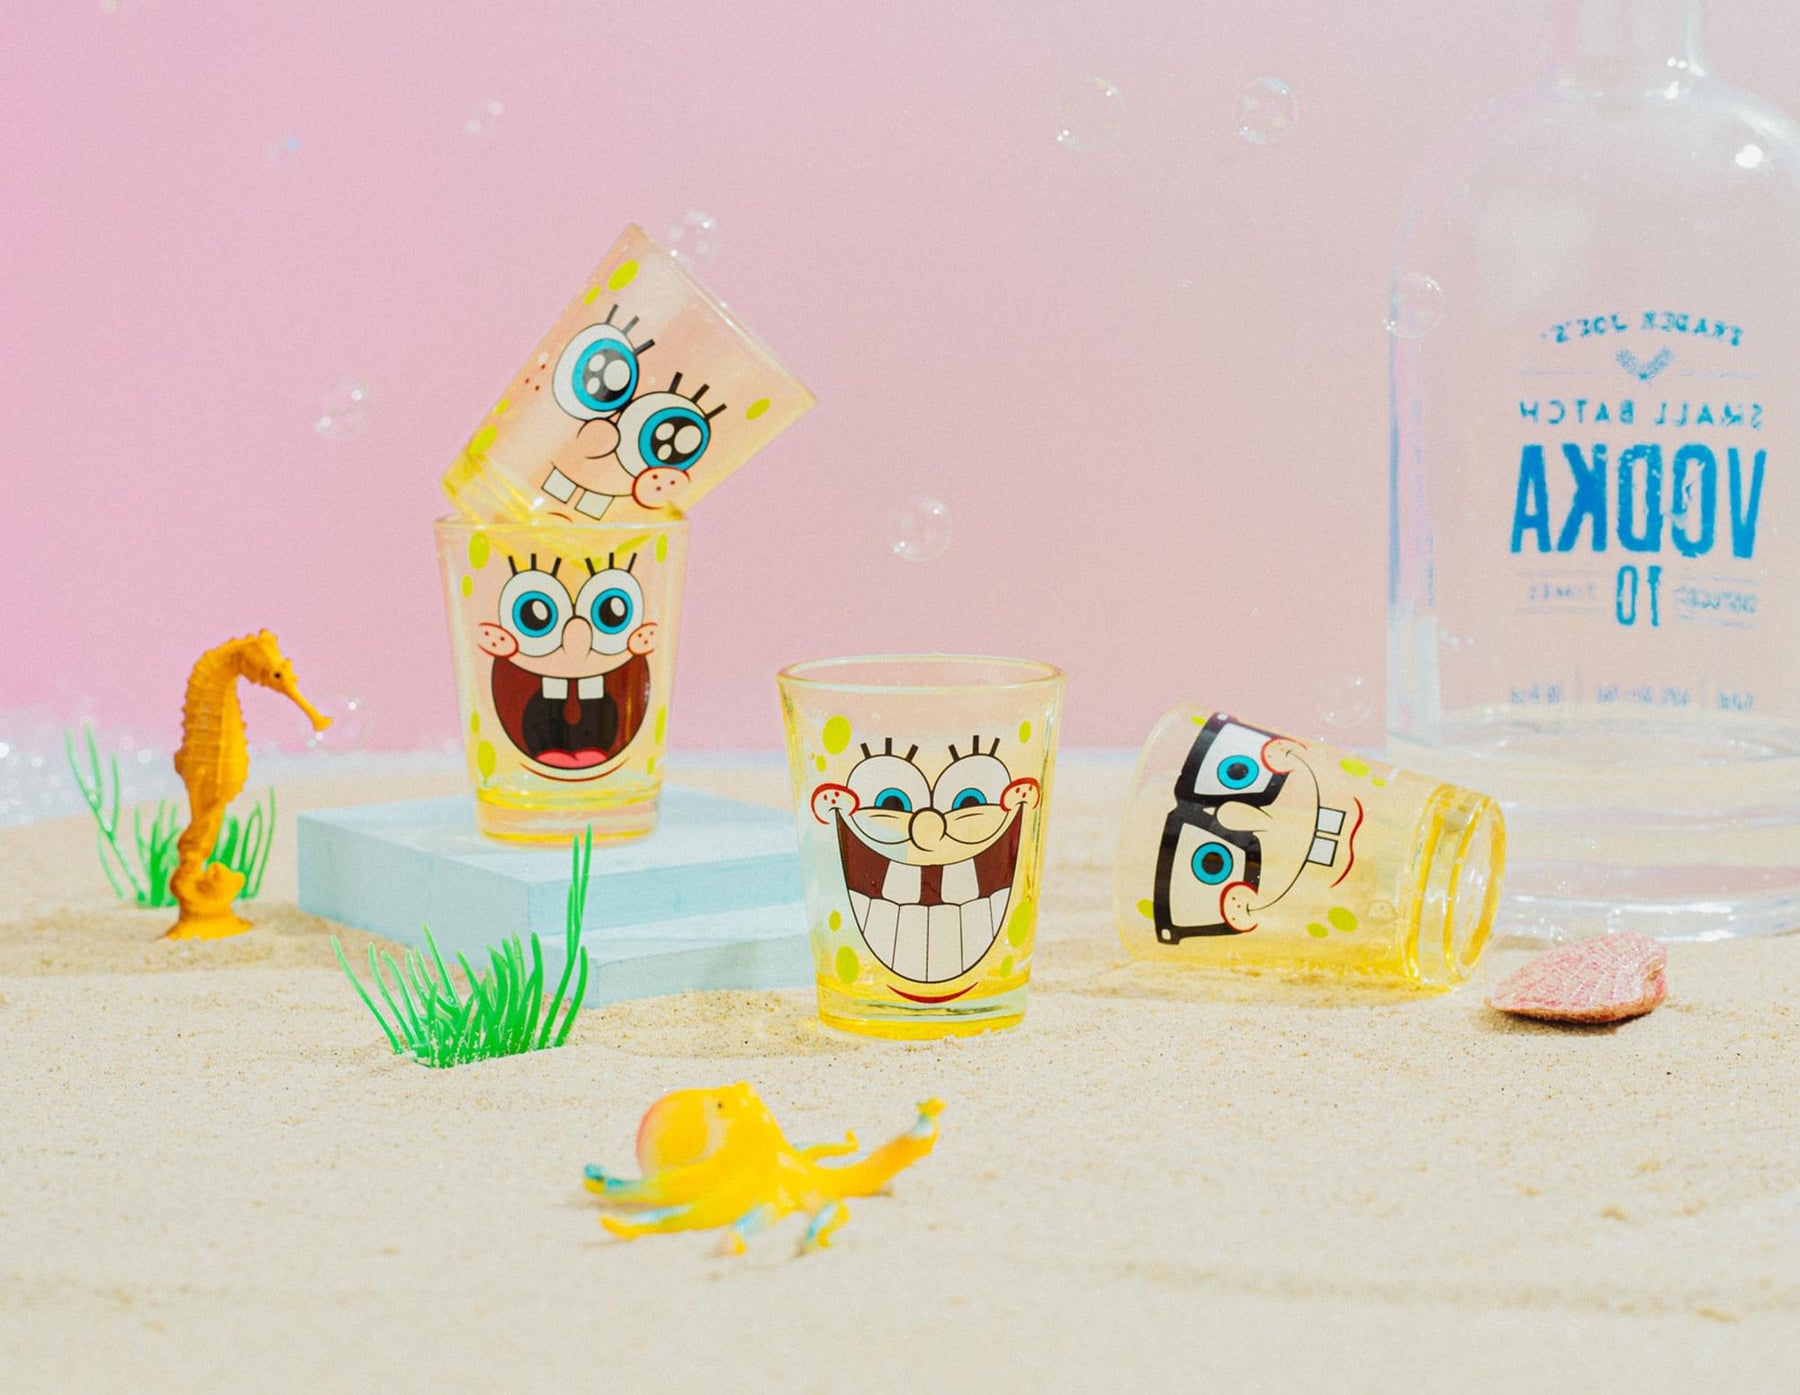 SpongeBob Squarepants Bottle Sippy Cups